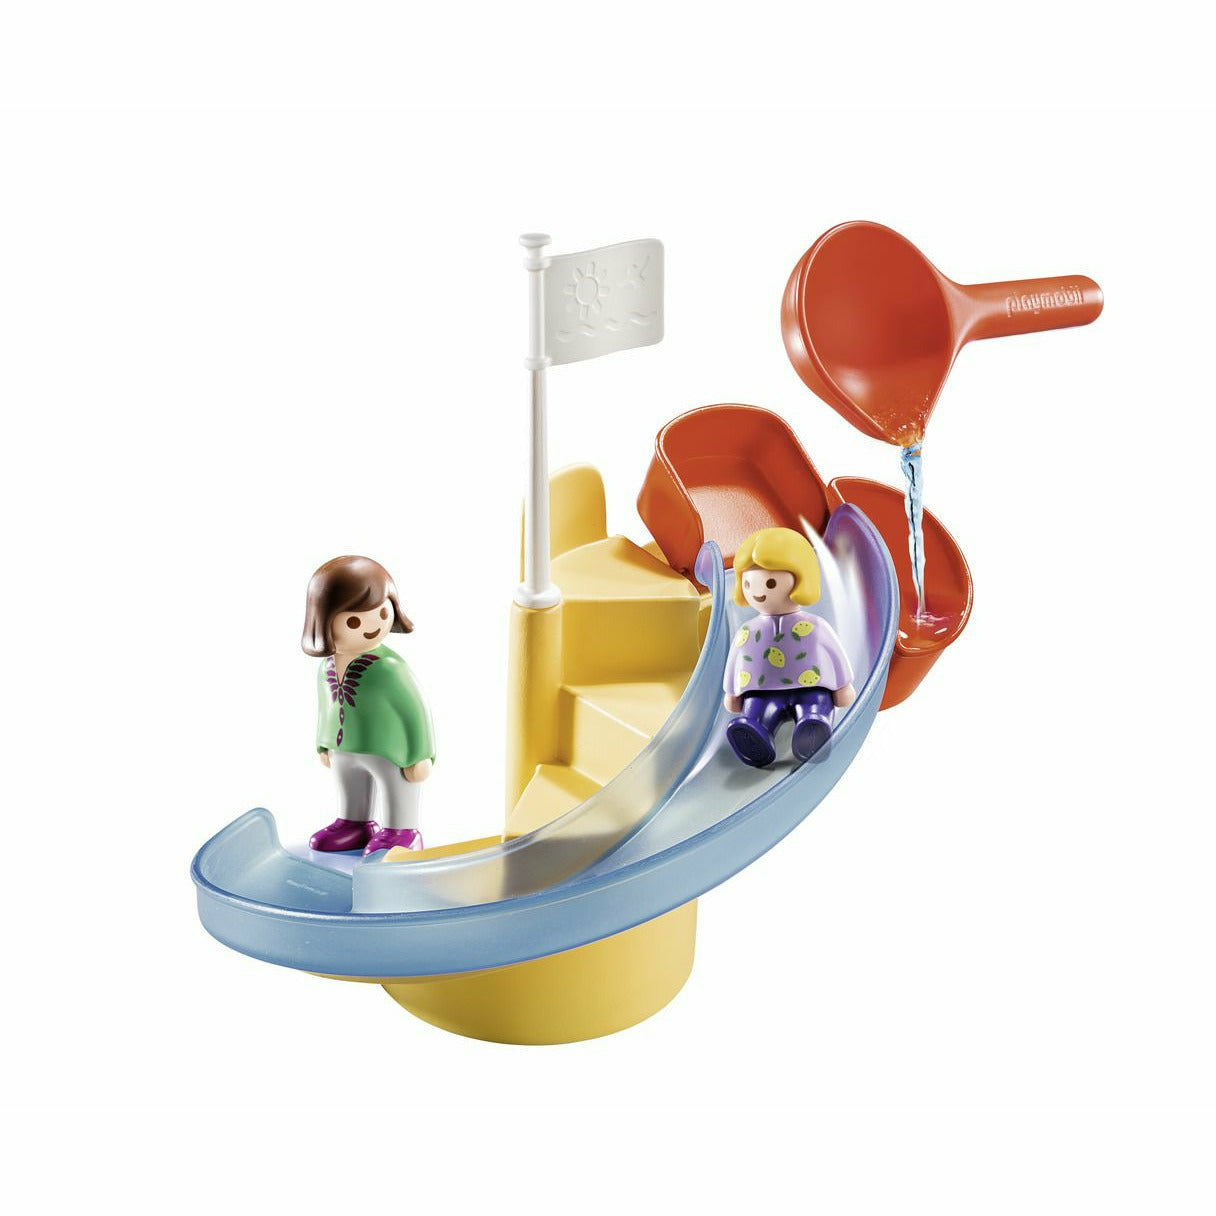 1.2.3 AQUA Water Slide-Toy Playsets-Playmobil-Yes Bebe